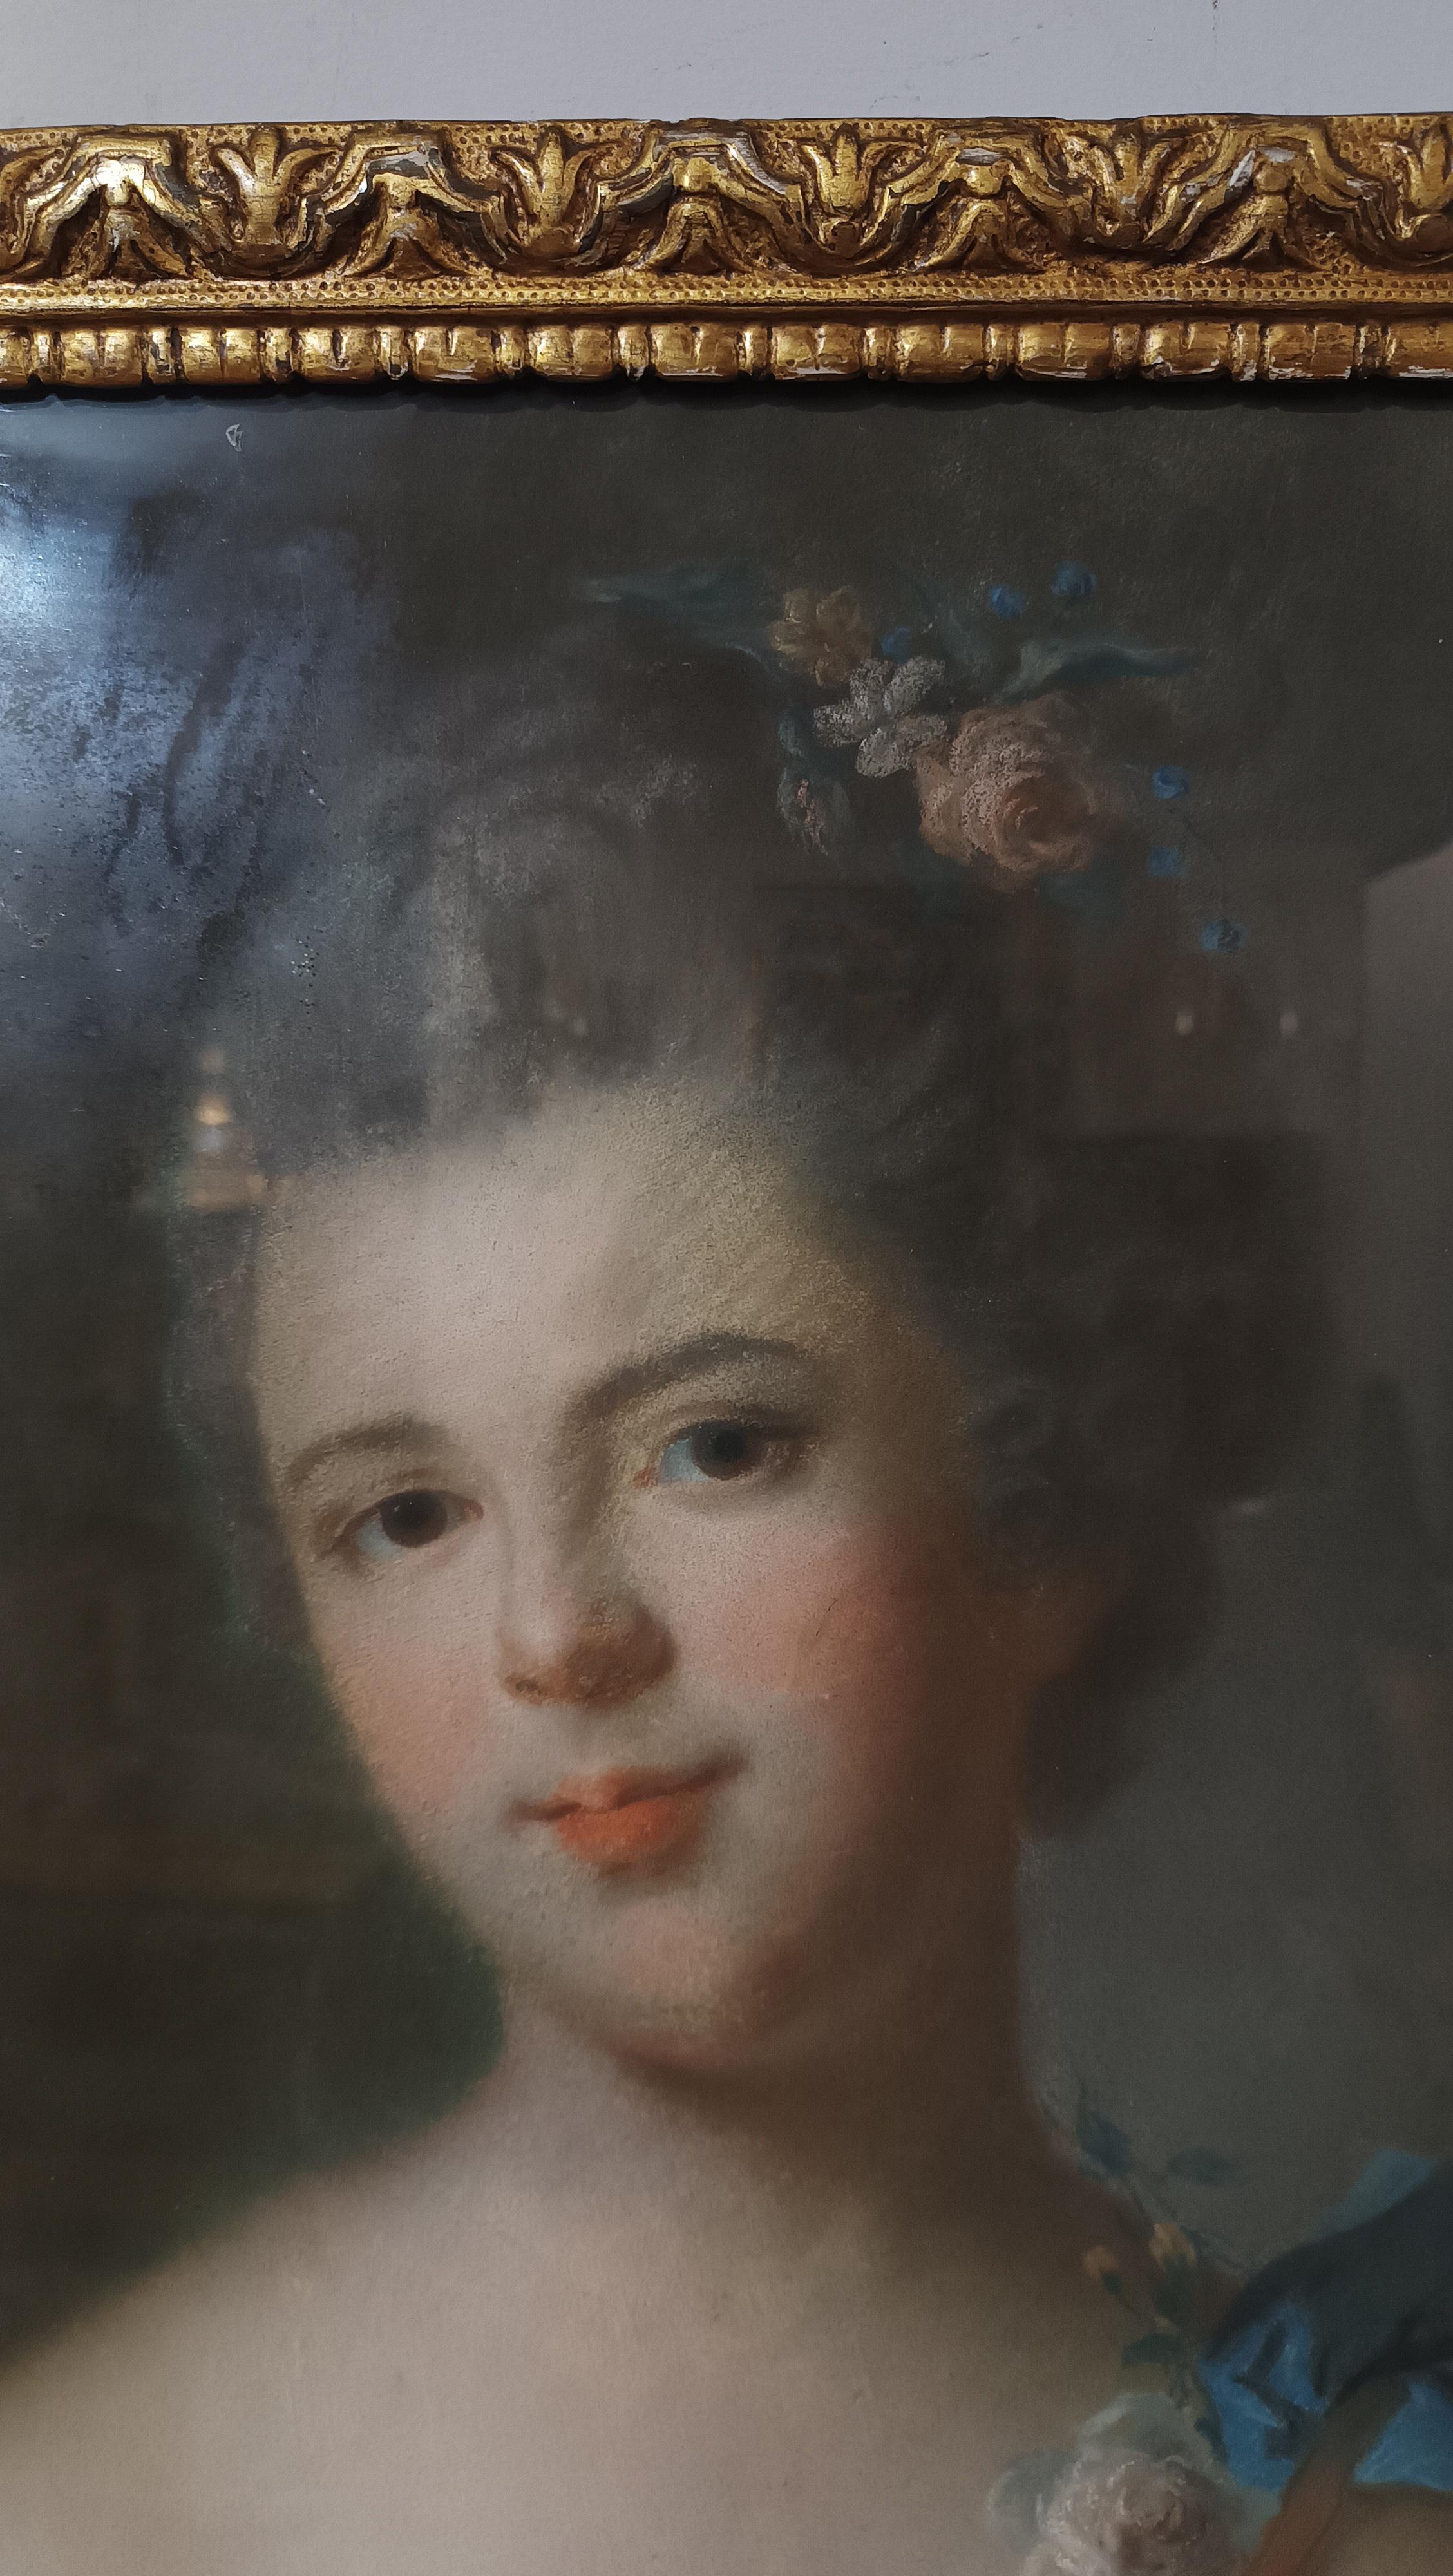 Italian 18th CENTURY ROSALBA CARRIERA SCHOOL - PORTRAIT OF A YOUNG GIRL